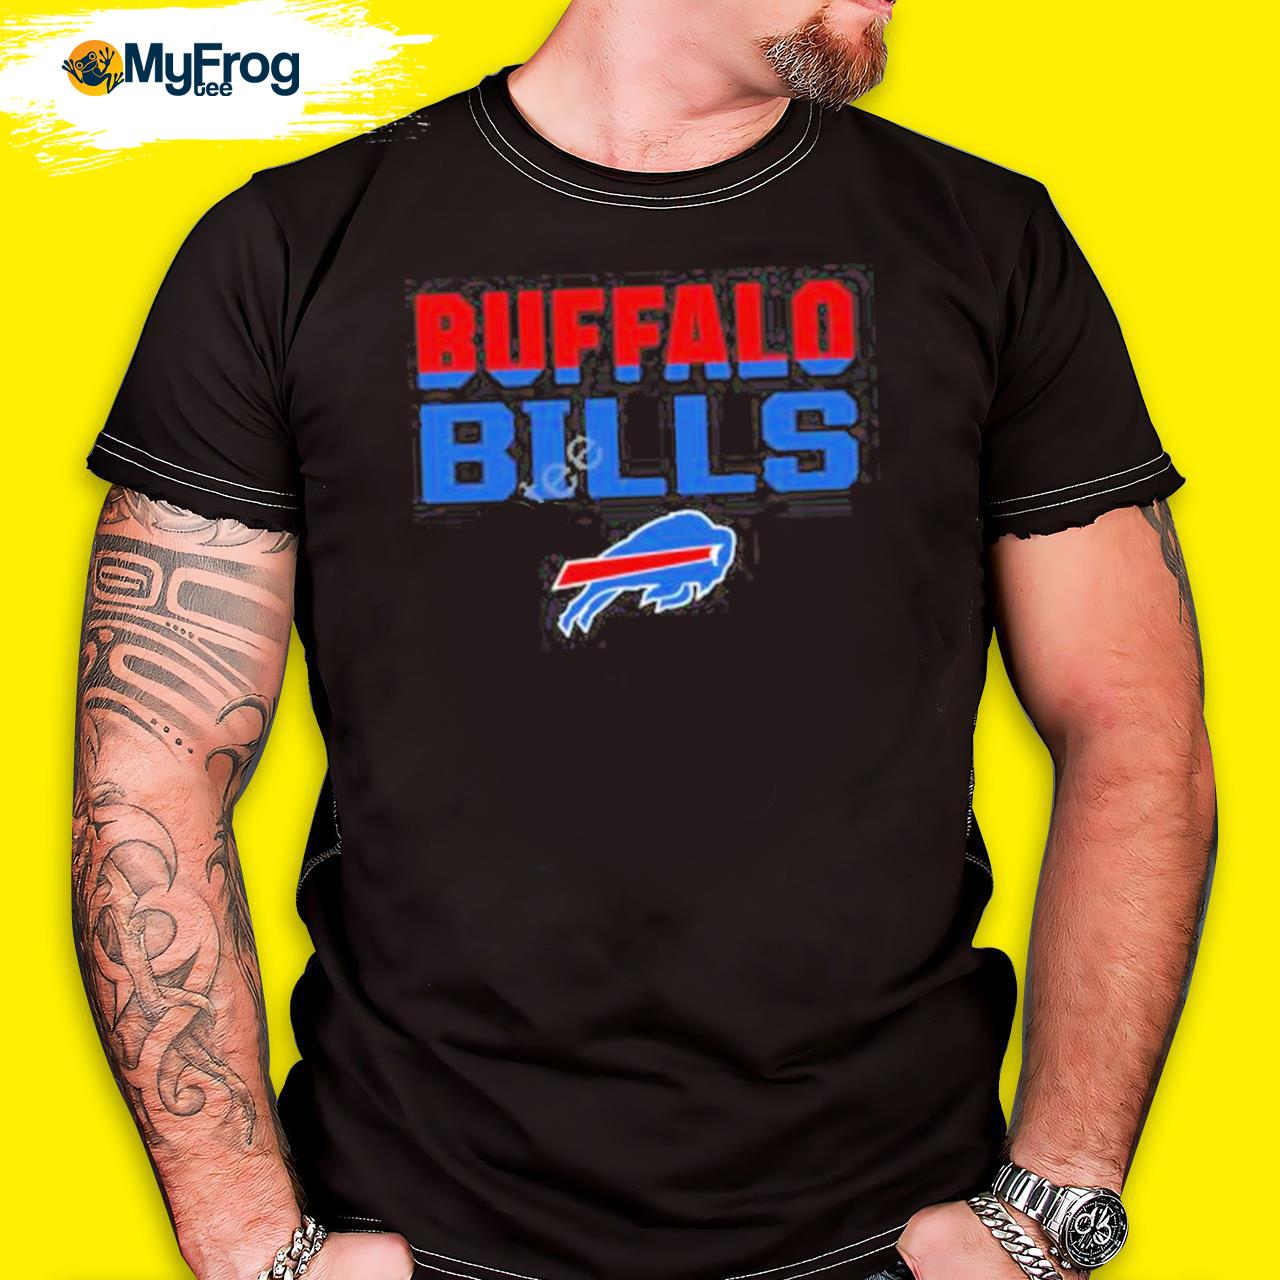 Wolf blitzer wearing Buffalo Bills shirt